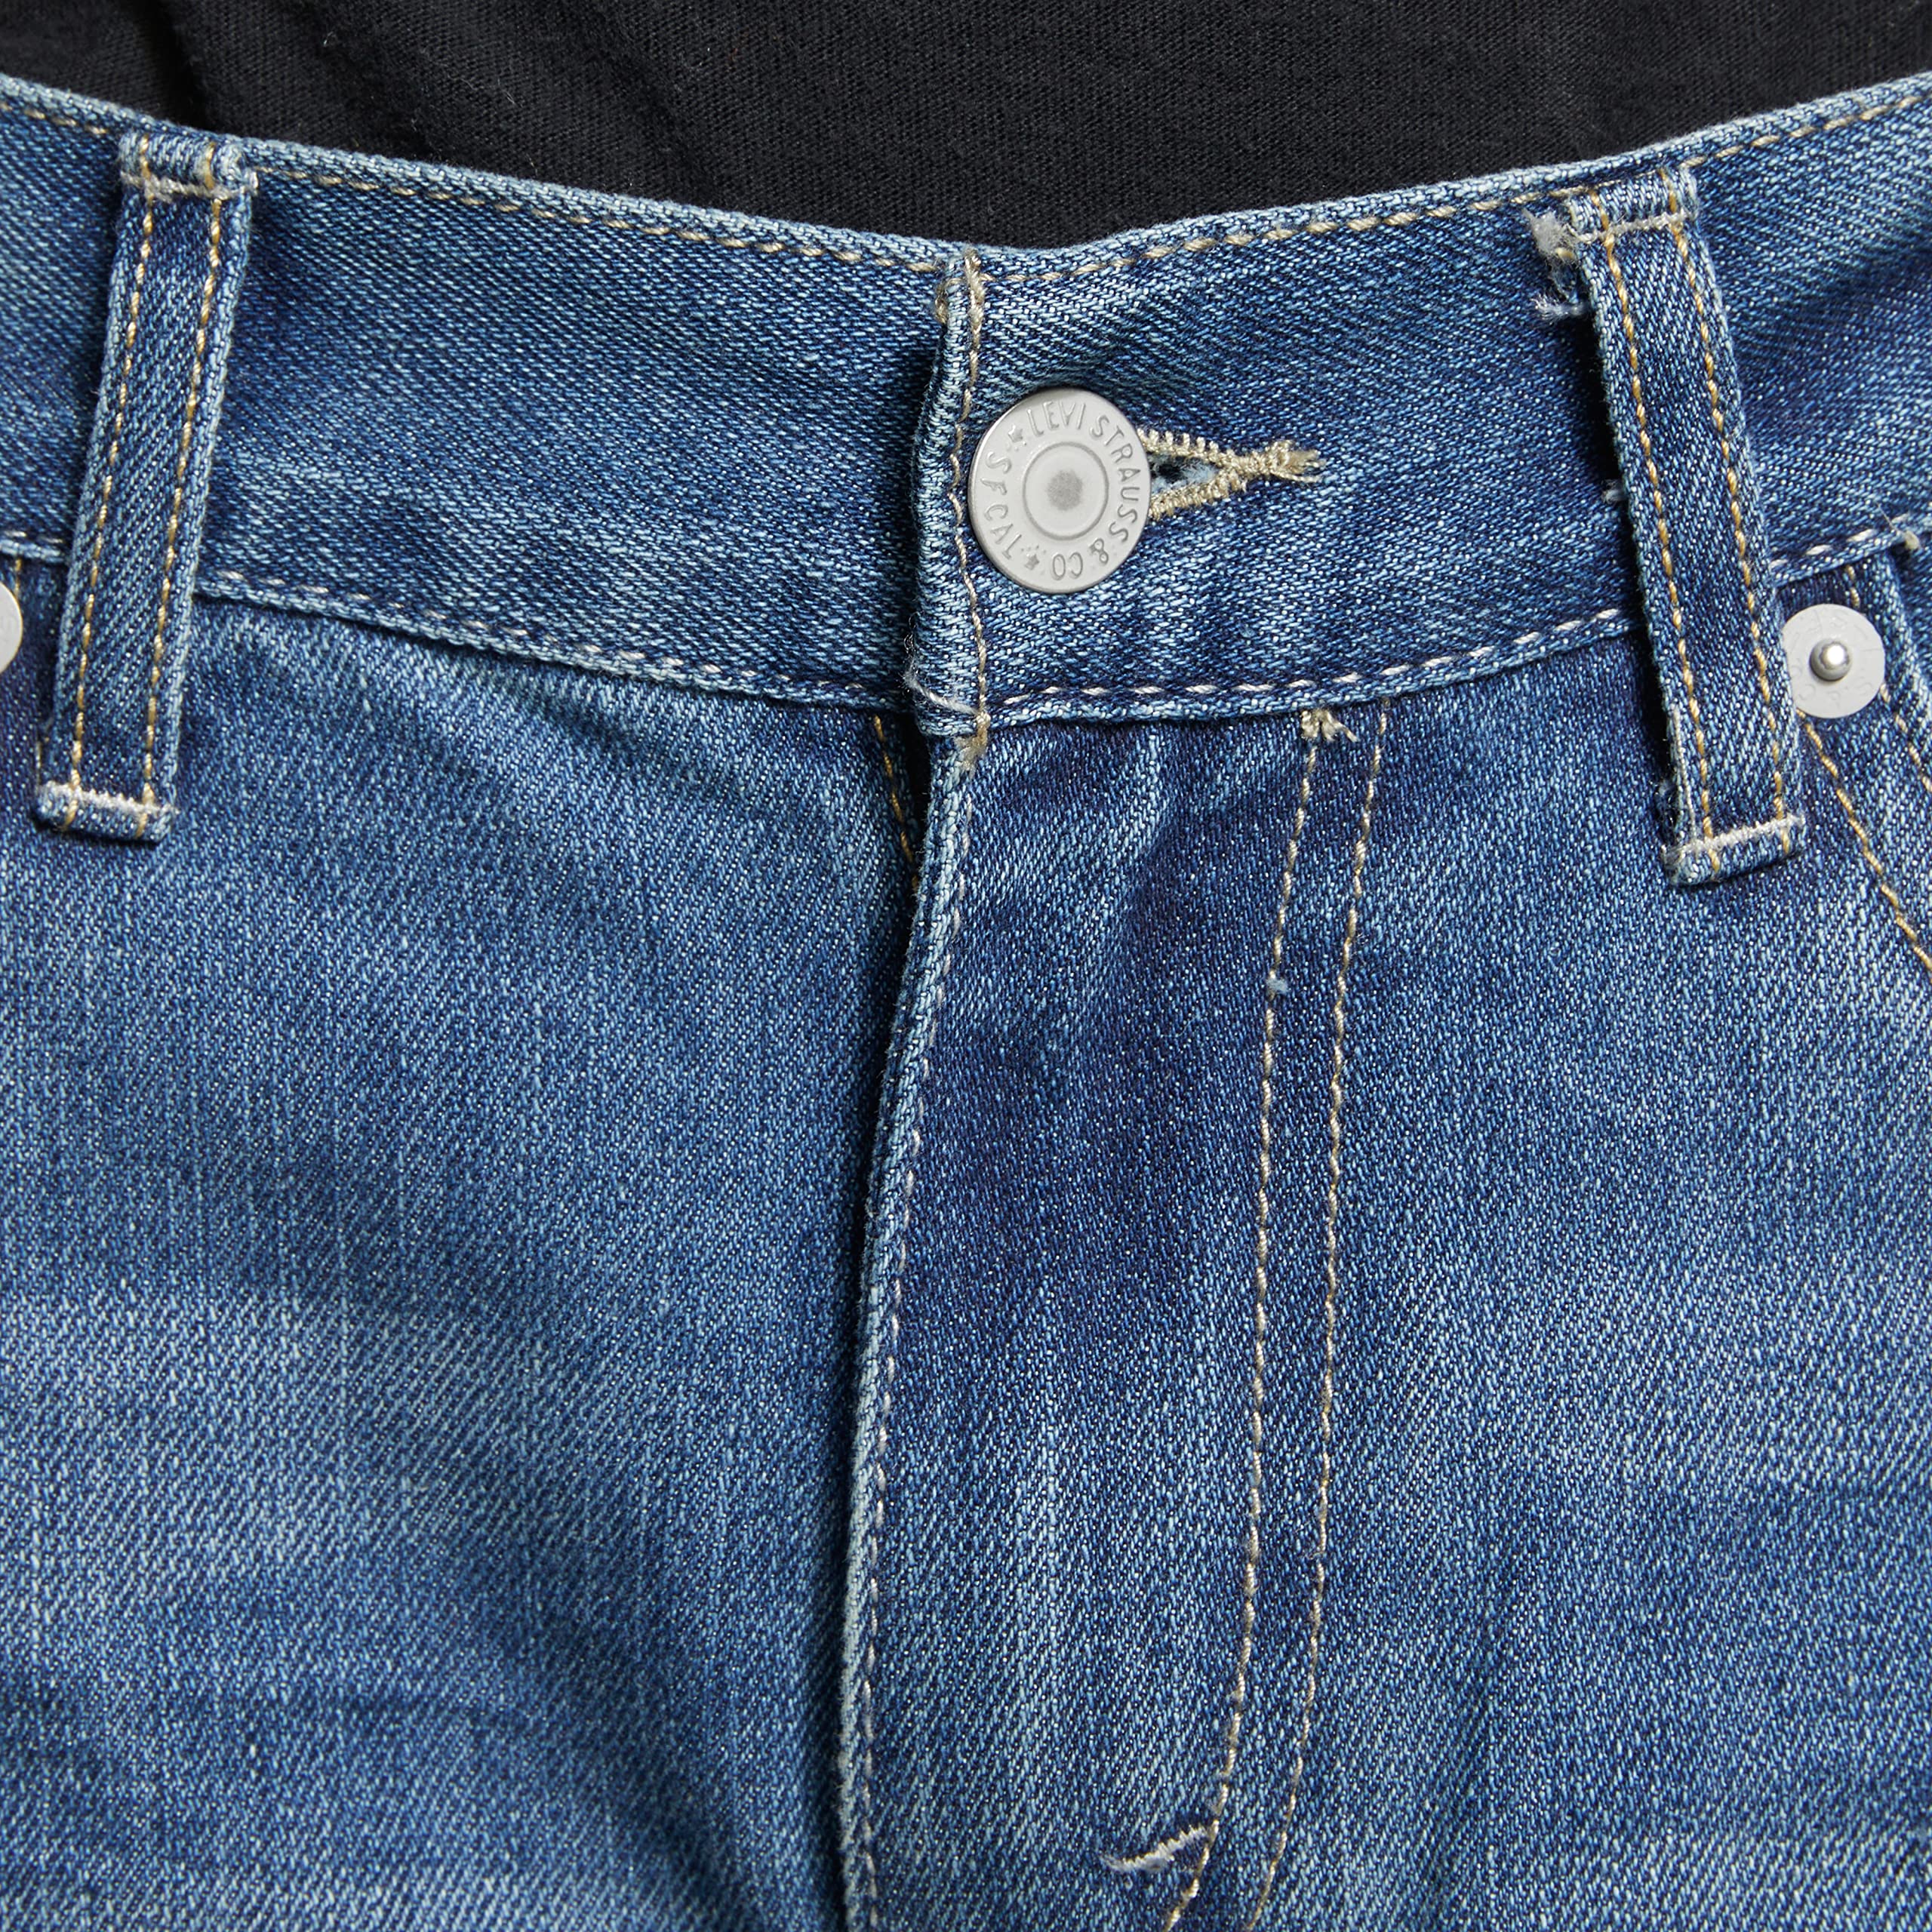 Levi's Boys' Regular Fit Jeans/Closeout